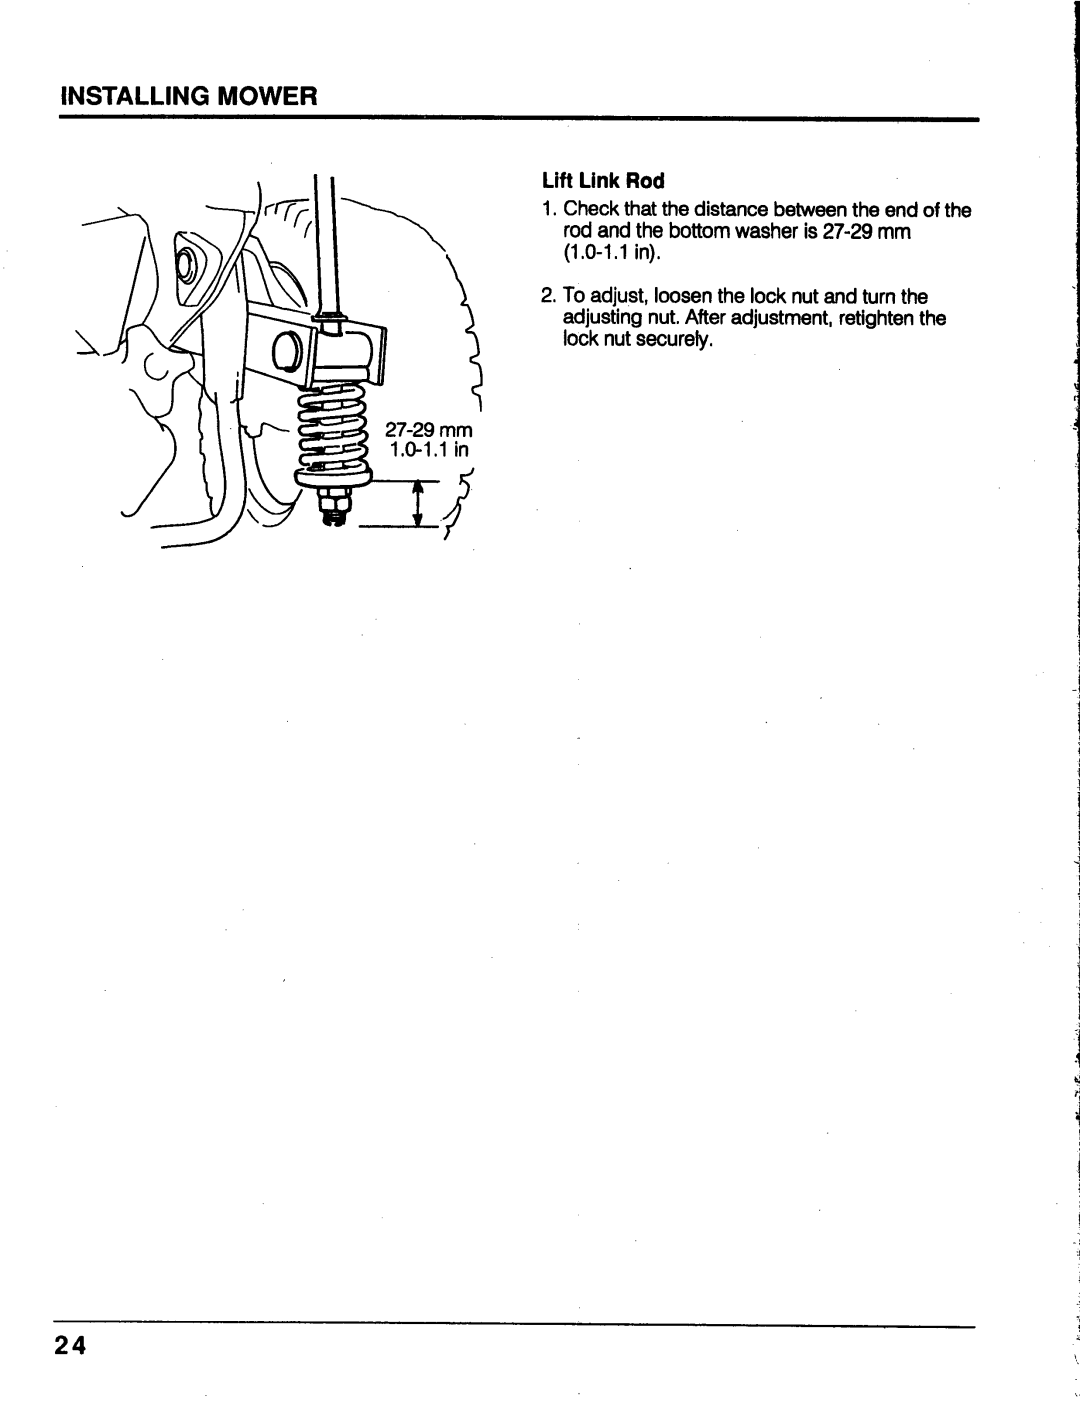 Honda Power Equipment MM52 manual Lift Link Rod, Installing Mower 